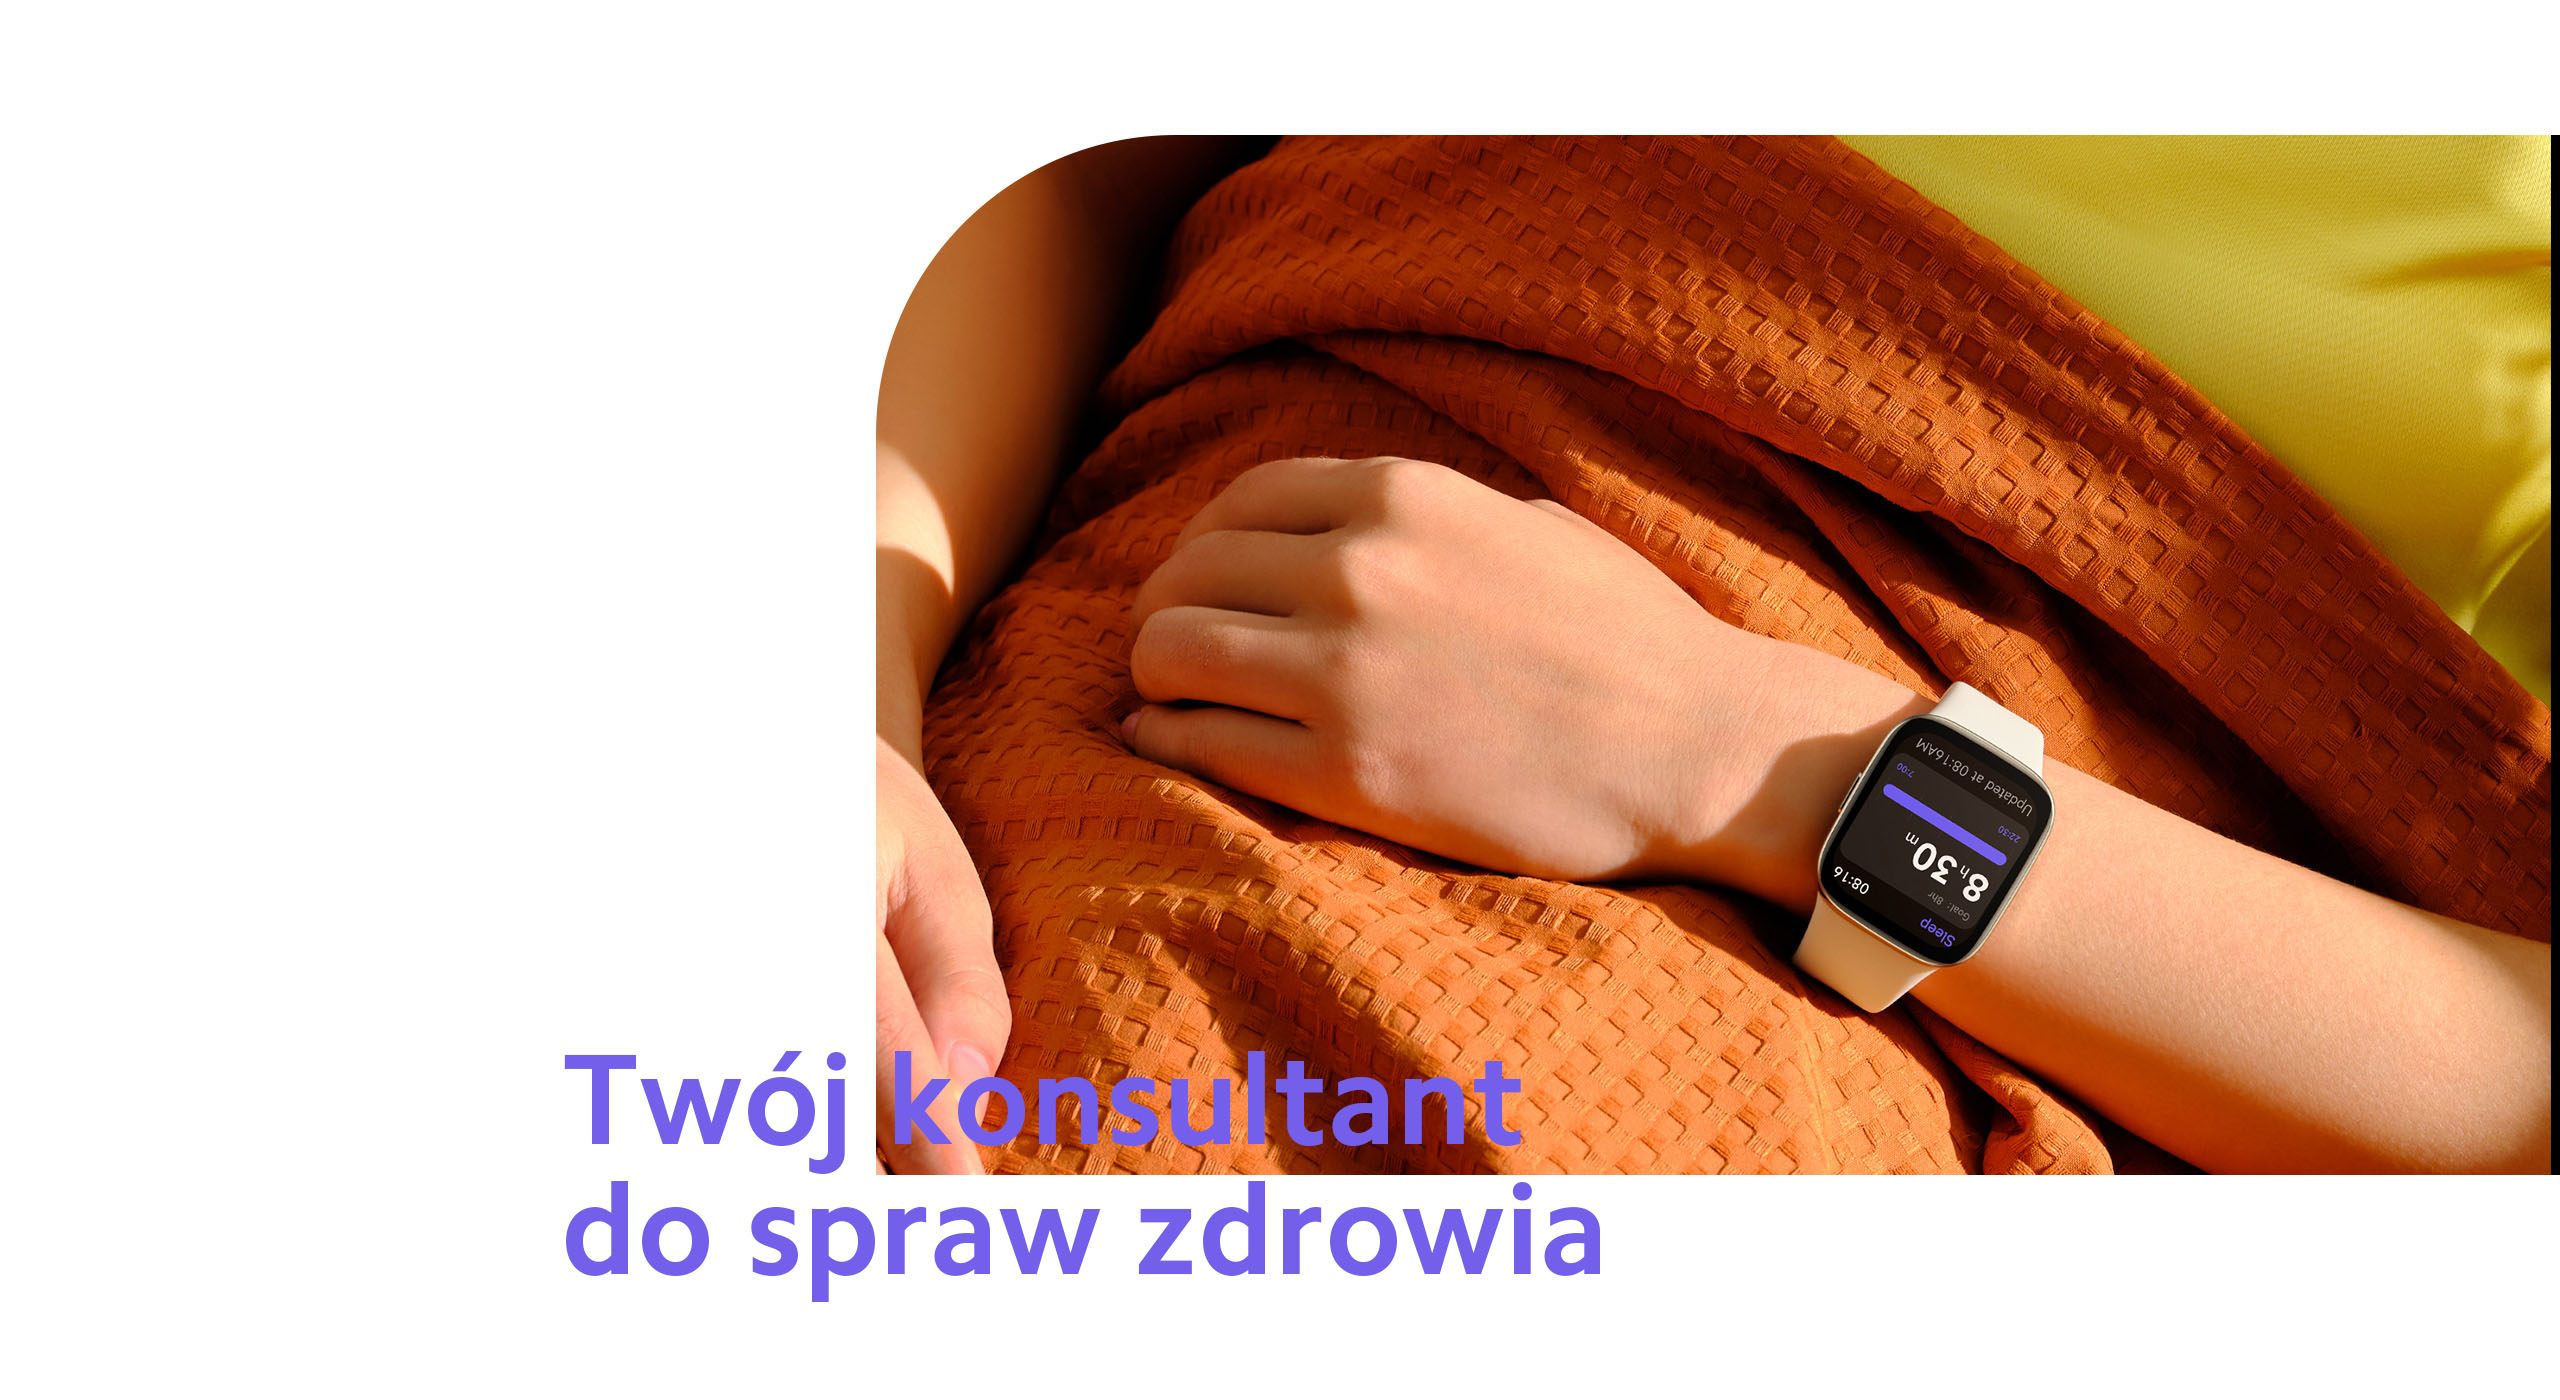 Xiaomi Redmi Watch 3 - Nowy zegarek Xiaomi